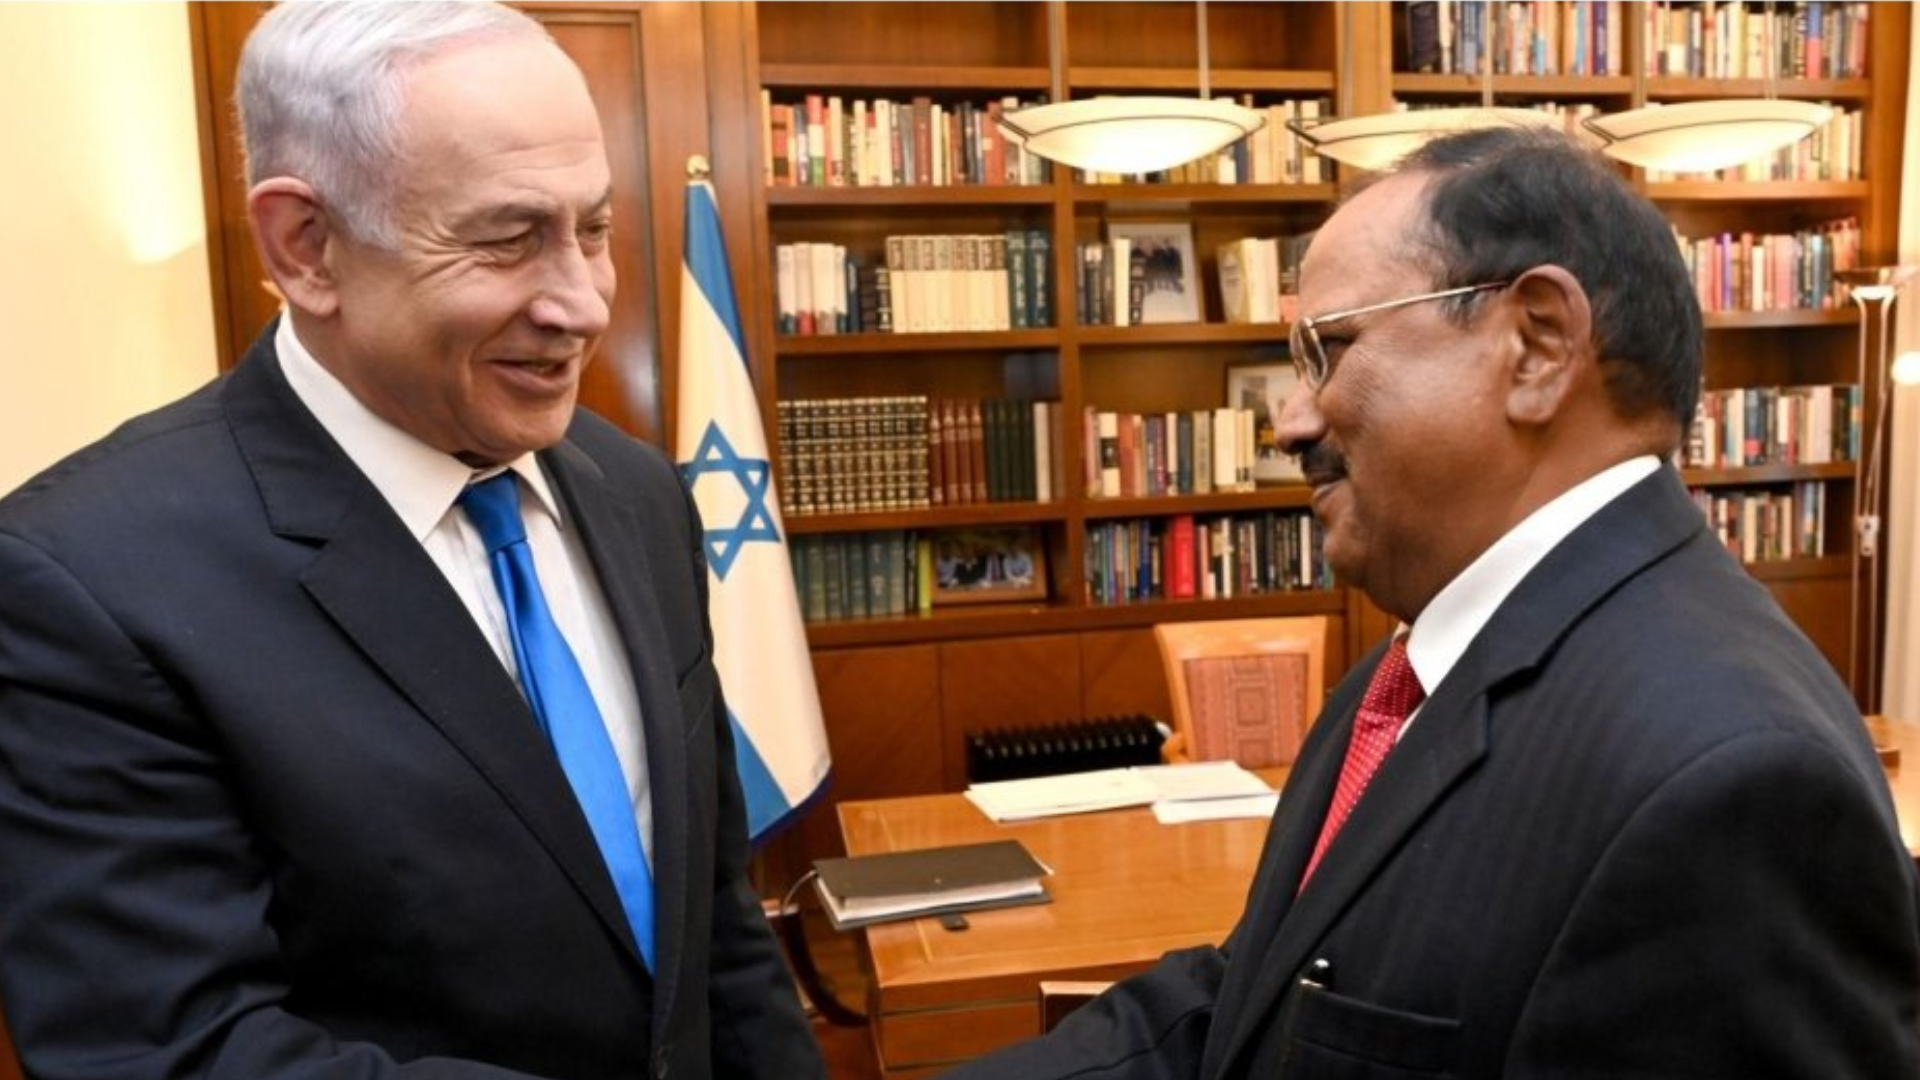 NSA Doval Visits PM Netanyahu reaffirms India’s “genuine friendship, empathy”